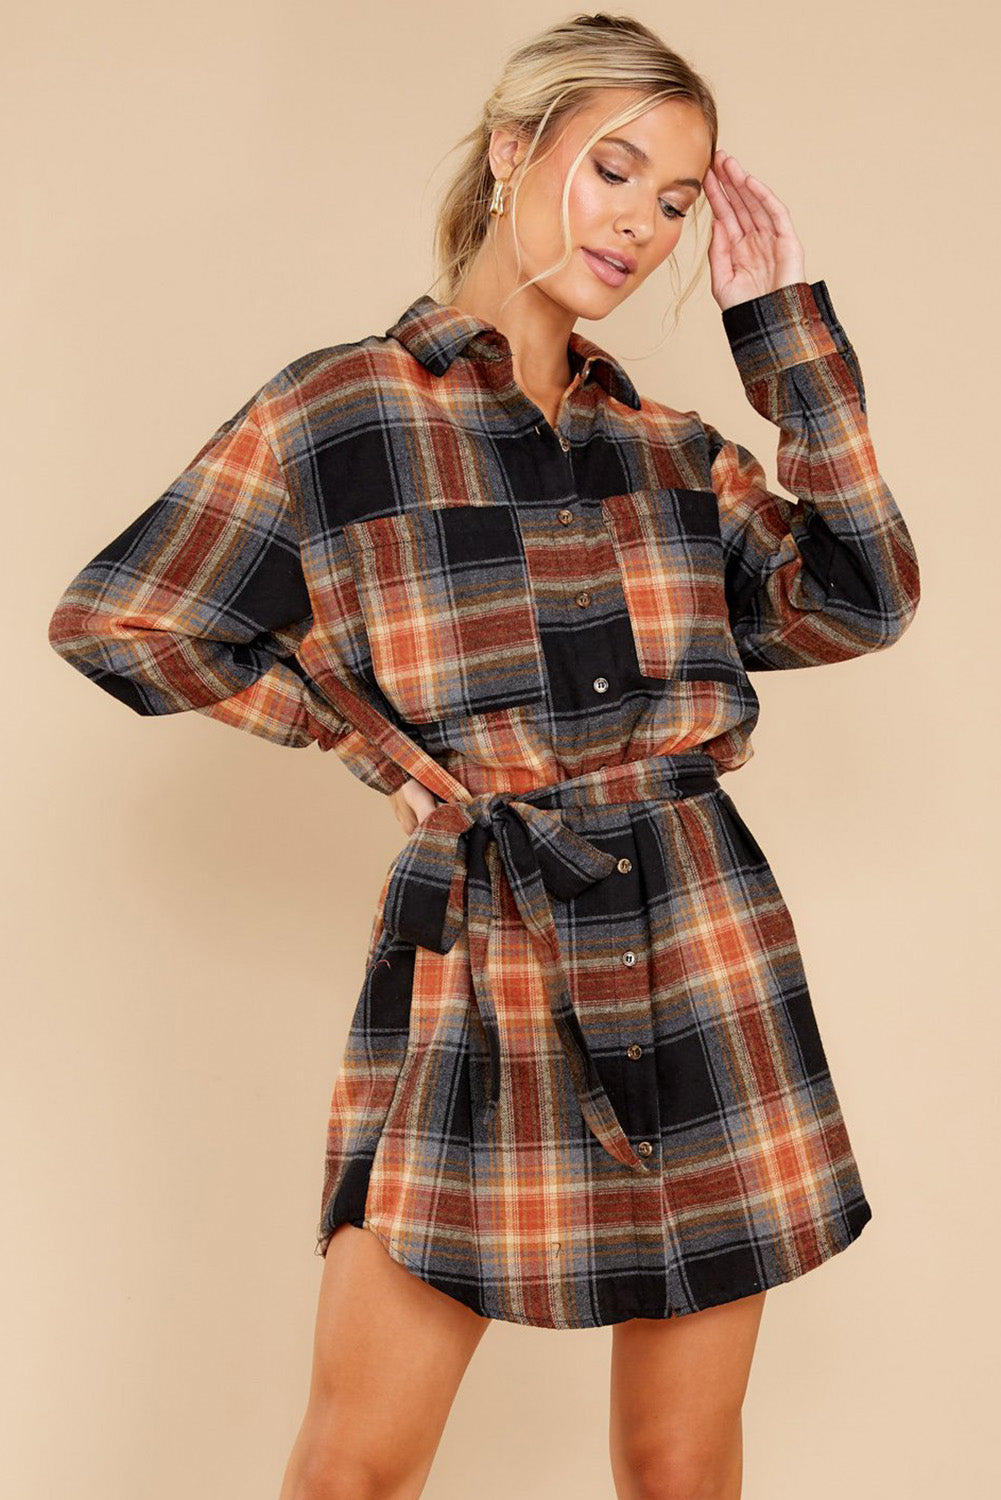 Plaid Chest Pocket Shirt Mini Dress with Belt Item NO.: 0594